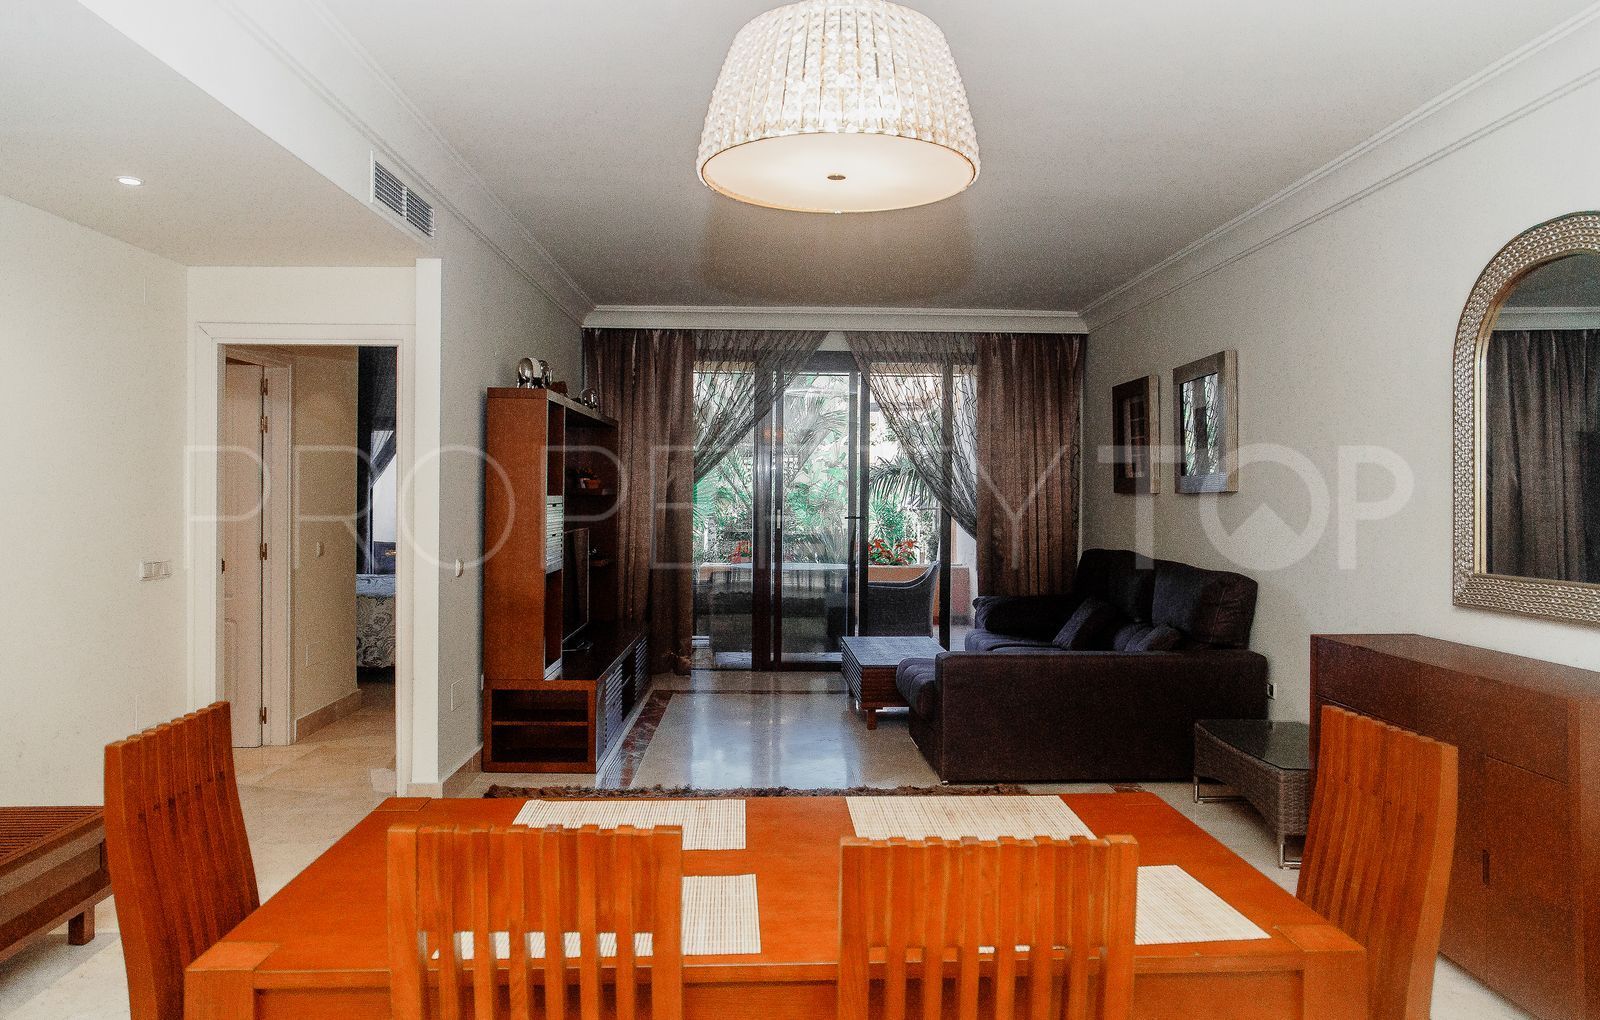 2 bedrooms ground floor apartment for sale in San Pedro de Alcantara